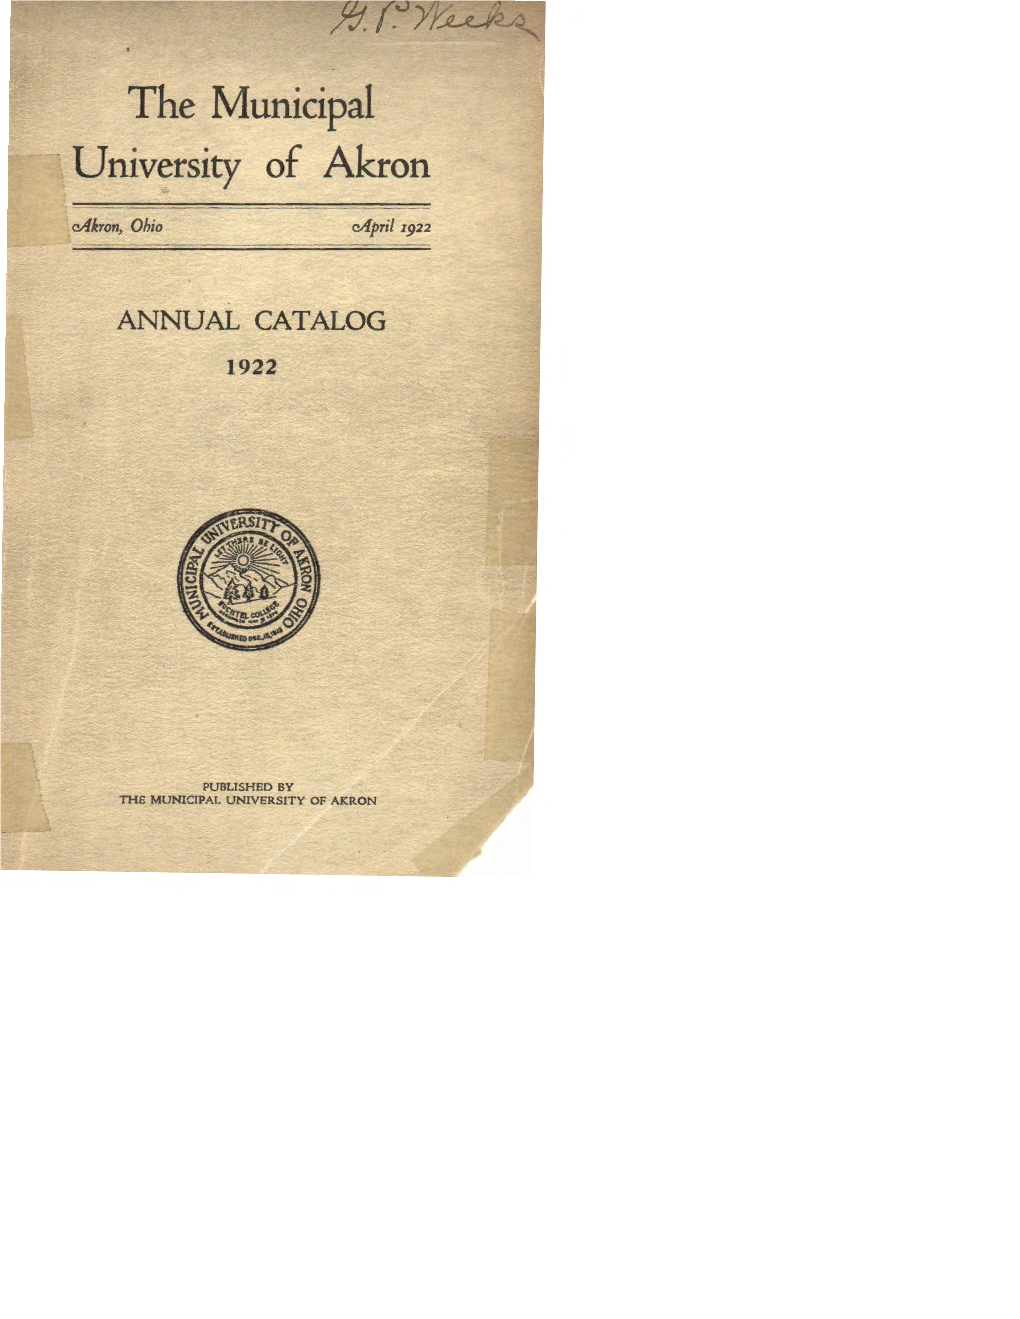 The Municipal University of Akron Cab-On, Ohio Capril 1922